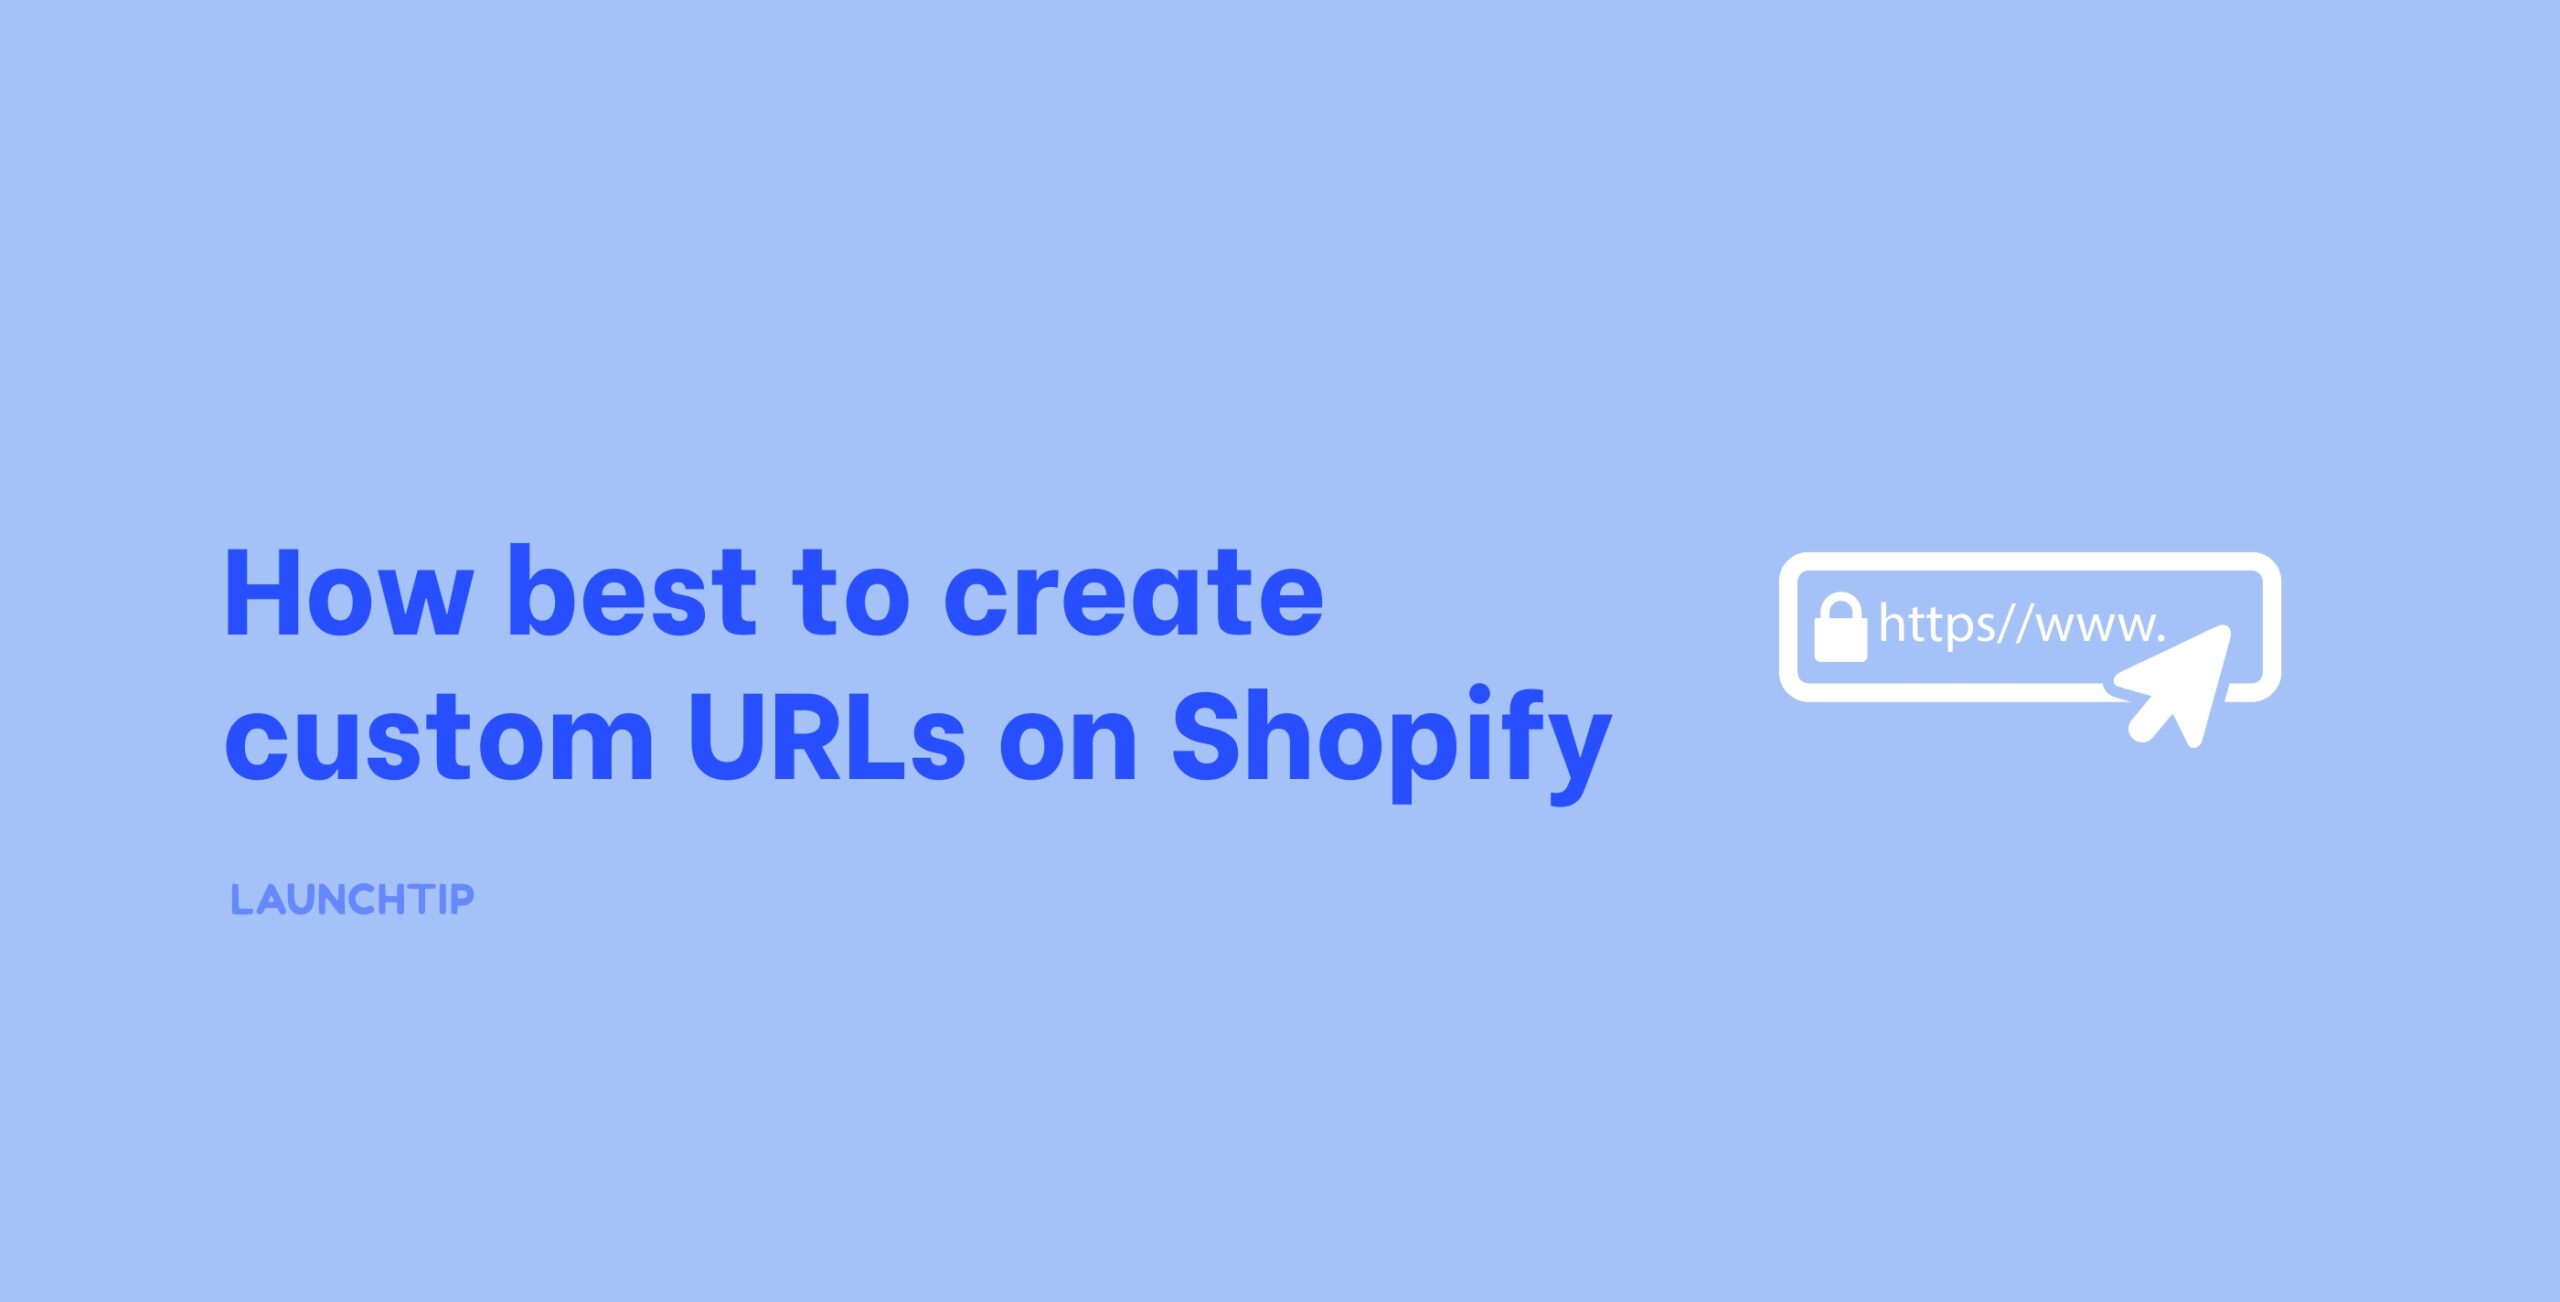 How best to create custom URLs on Shopify